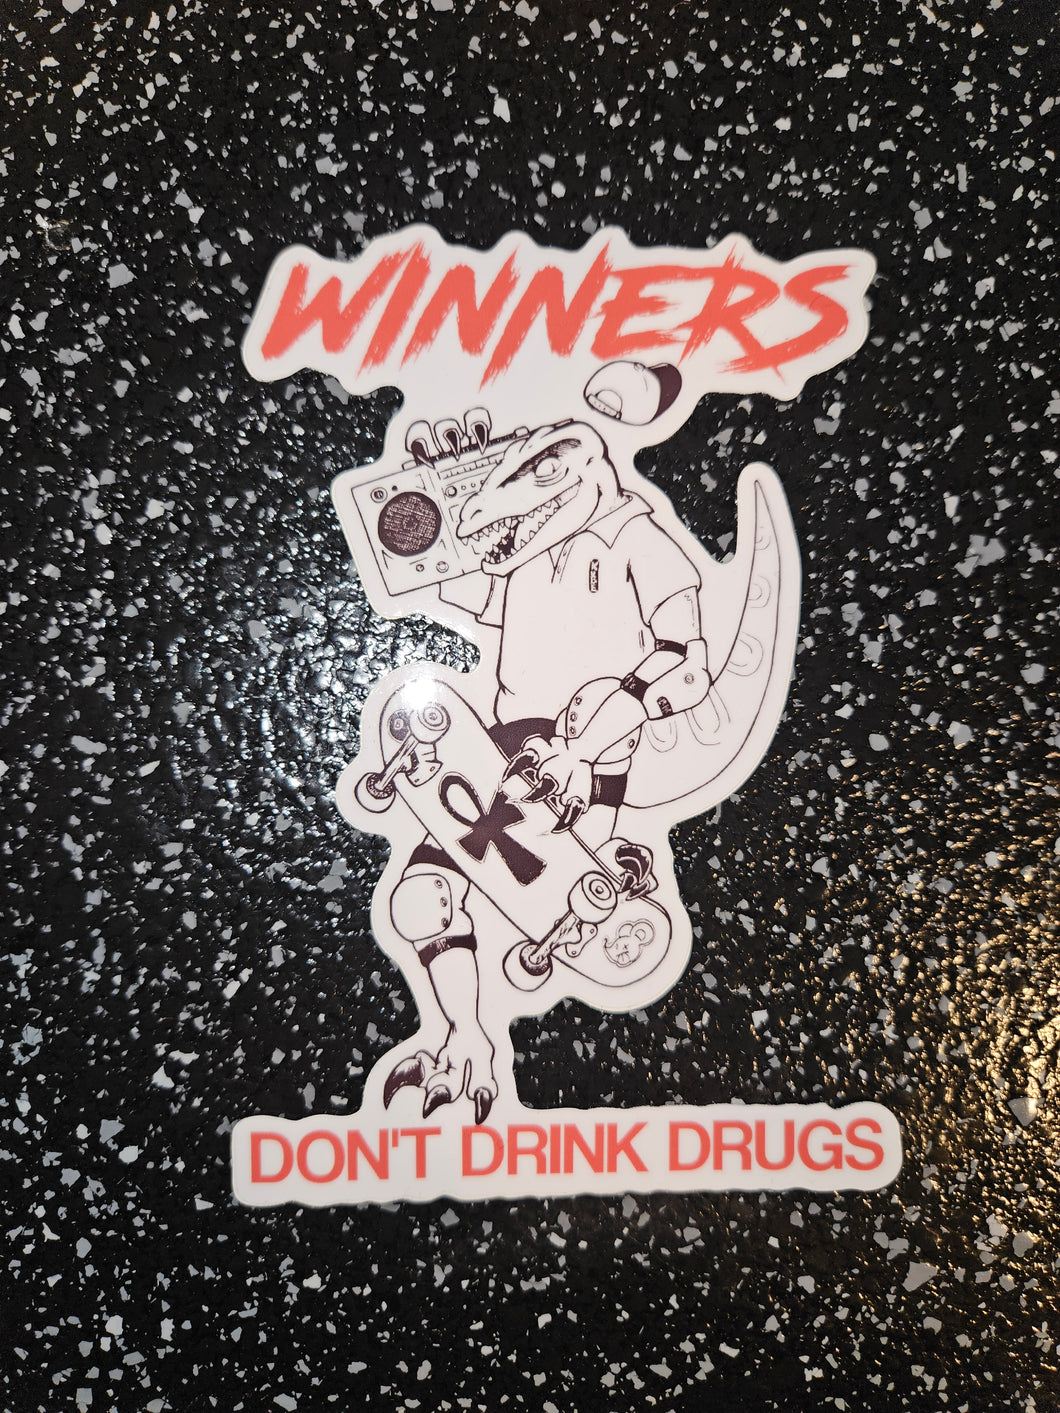 WINNERS DON'T DRINK DRUGS DIE-CUT STICKERS